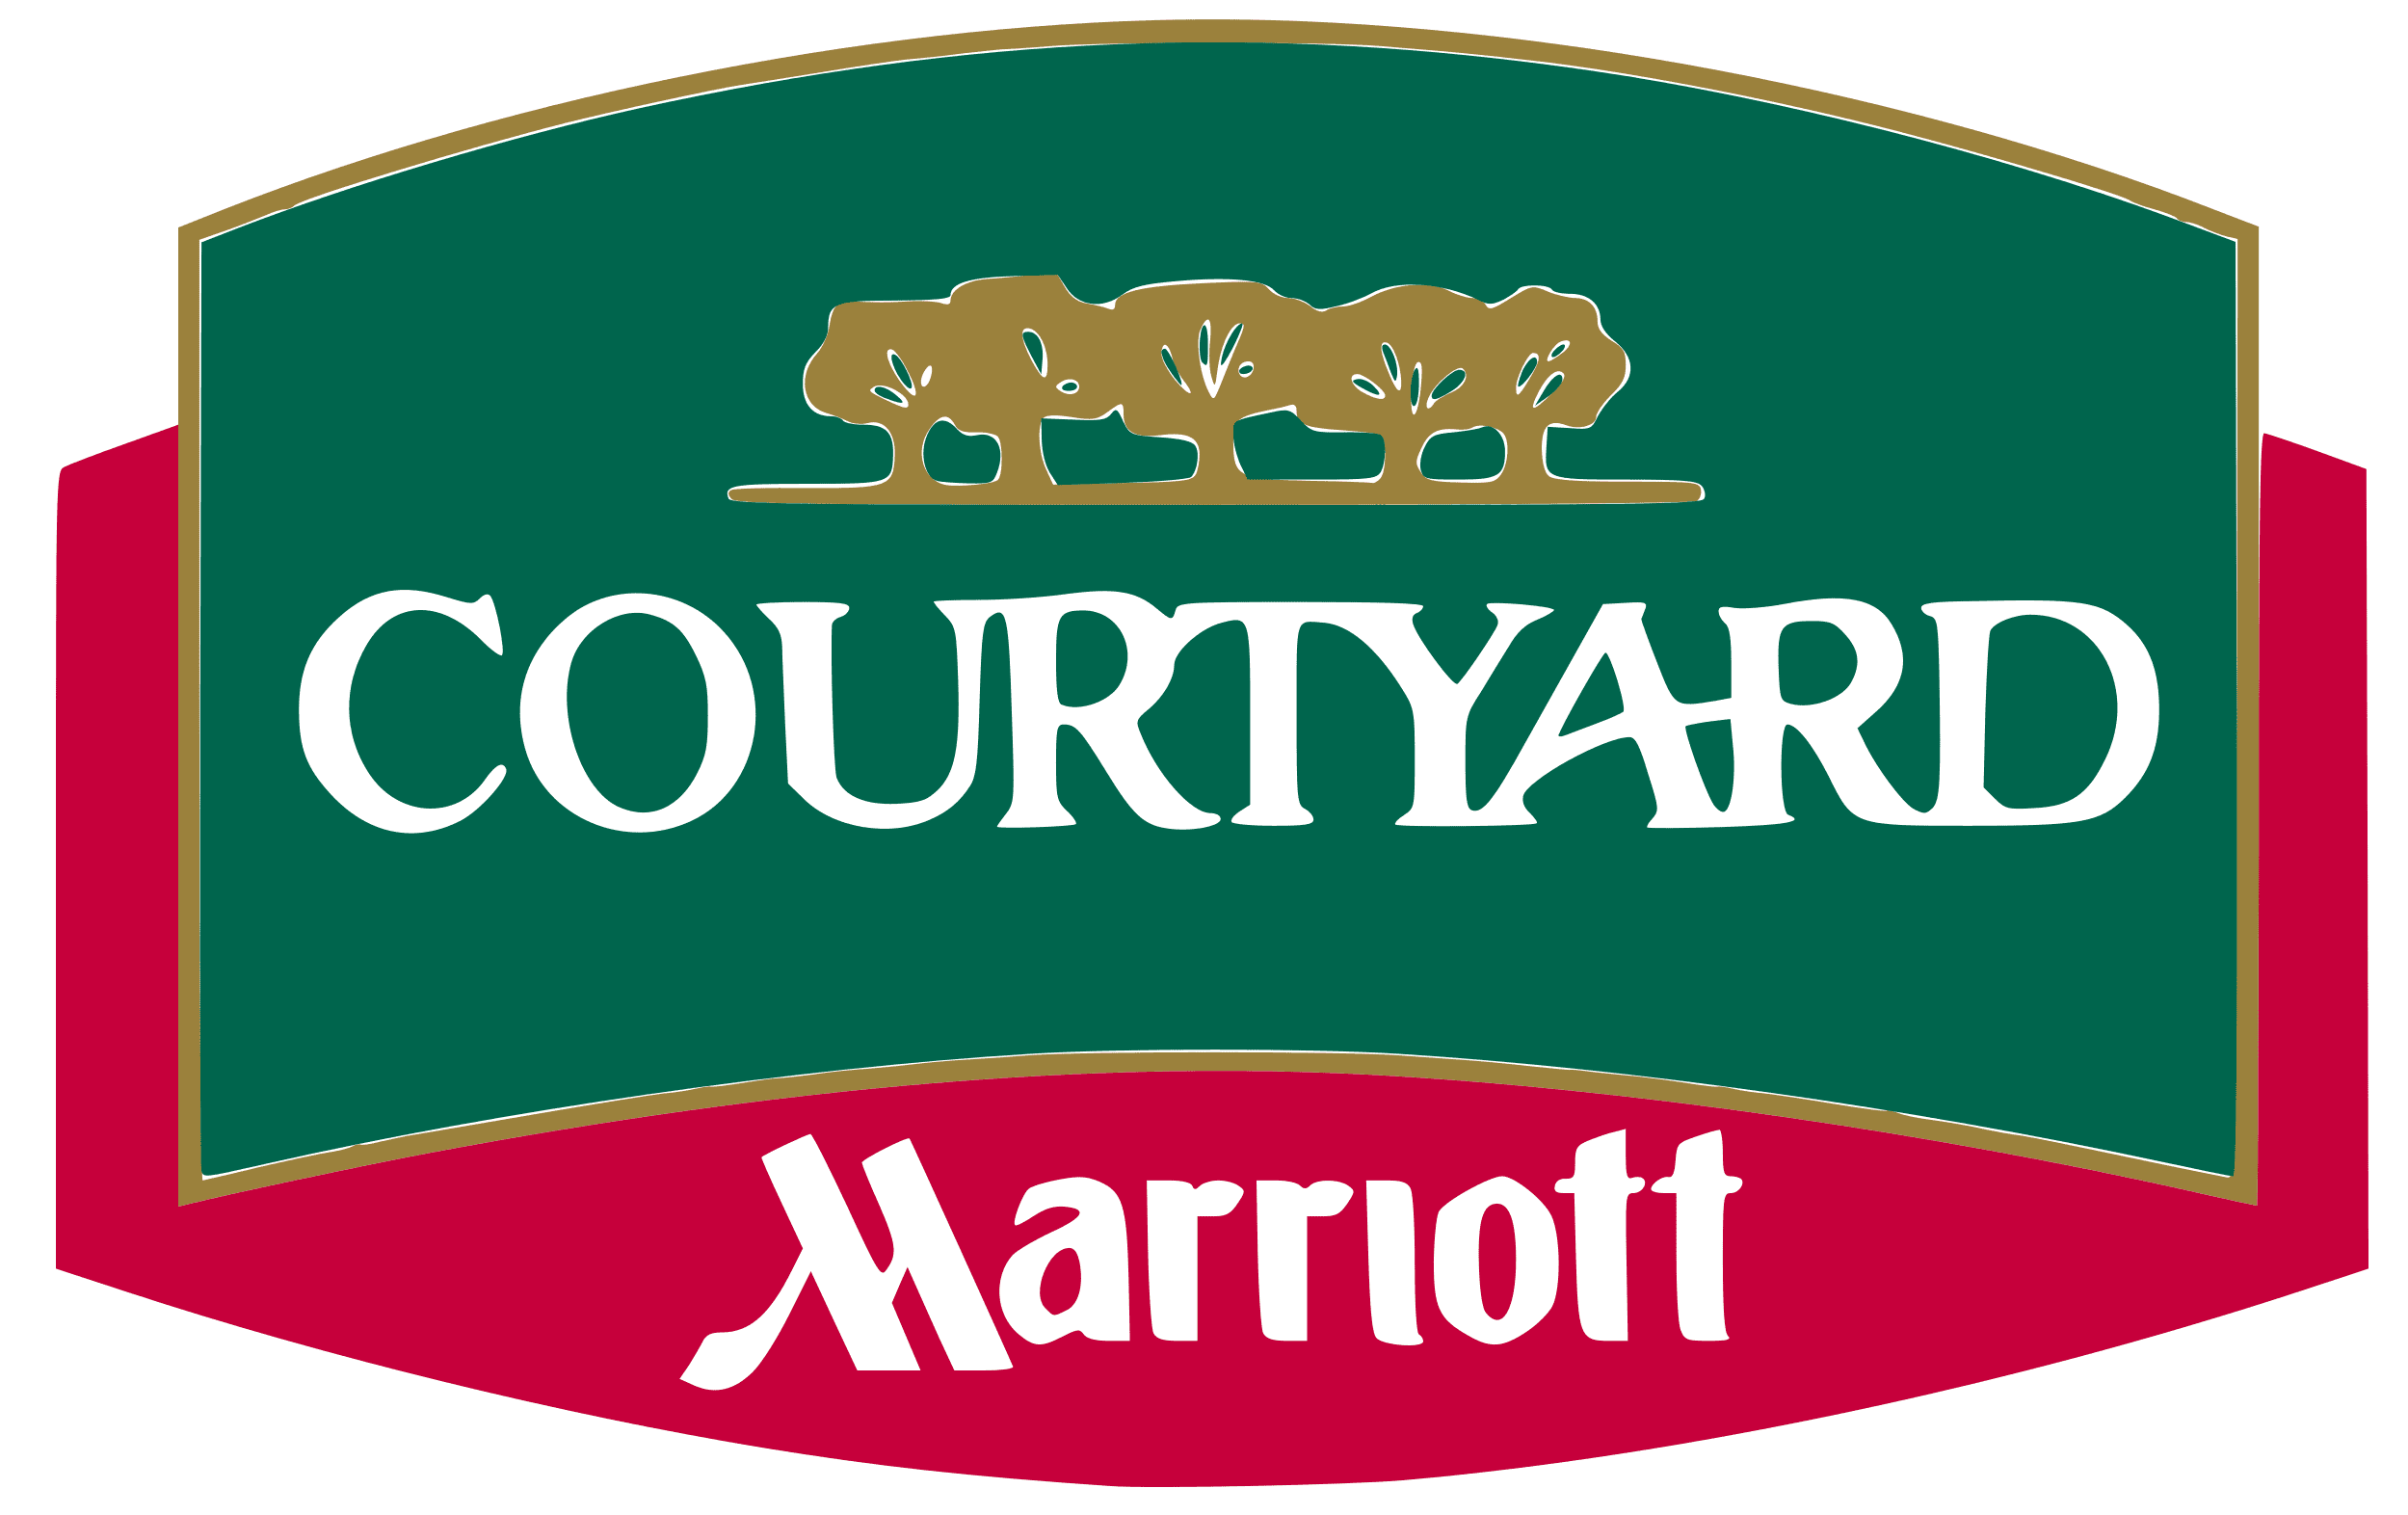 Courtyard By Marriott